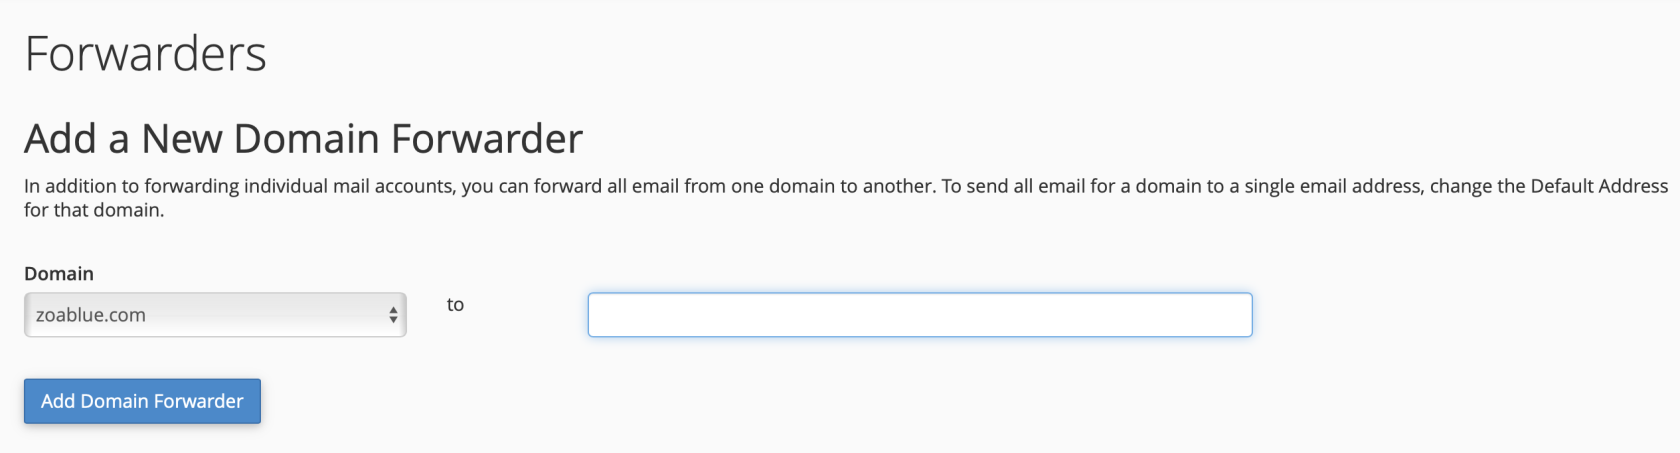 Create an Email Domain Forwarder